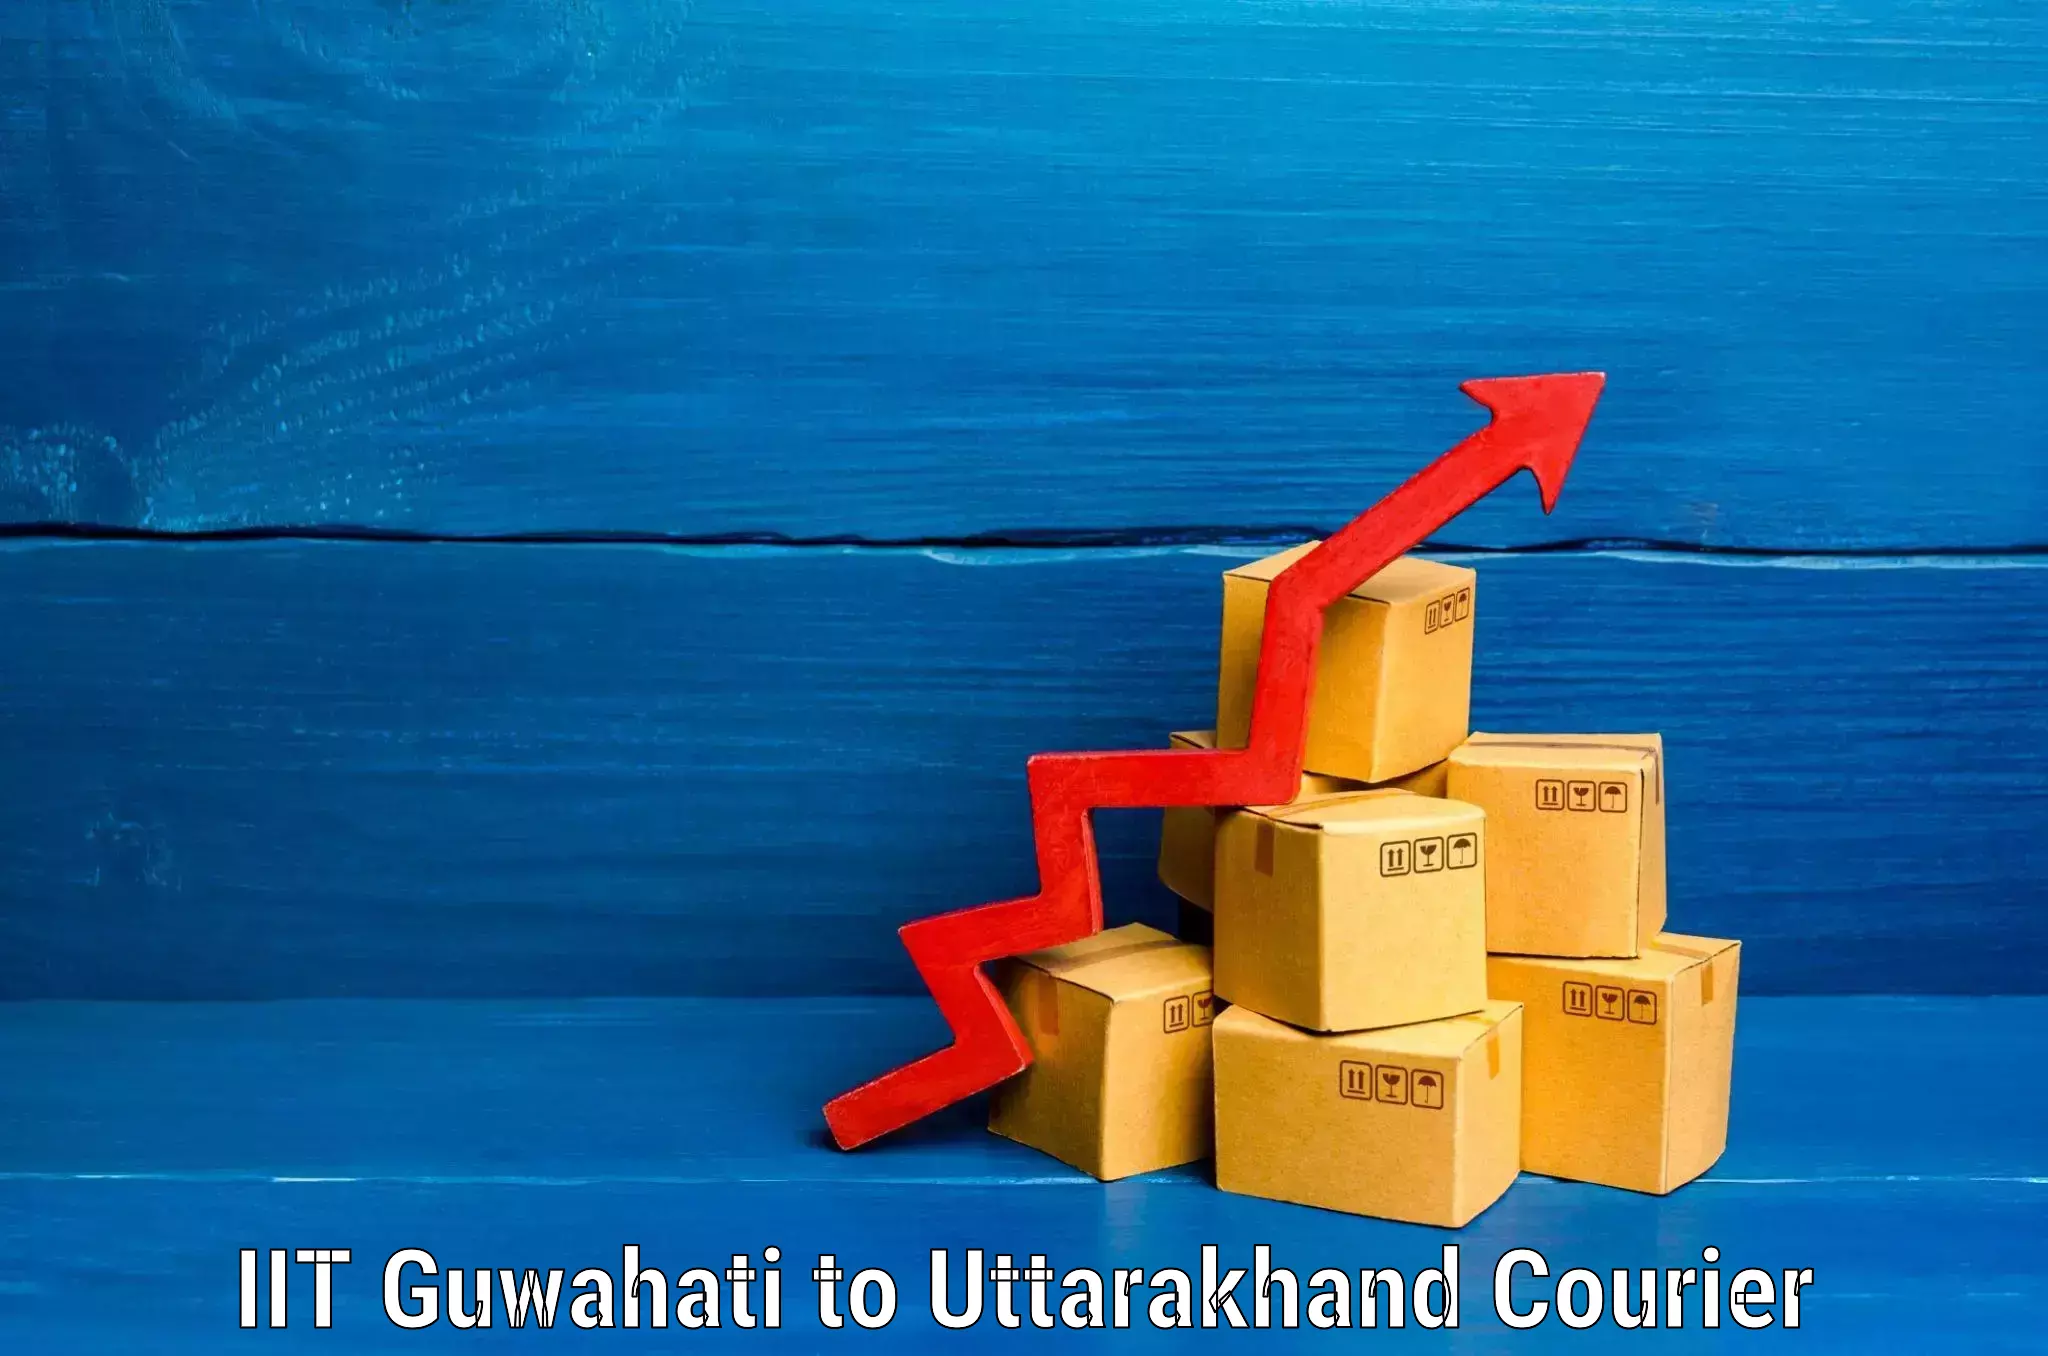 Luggage shipment specialists IIT Guwahati to Uttarakhand